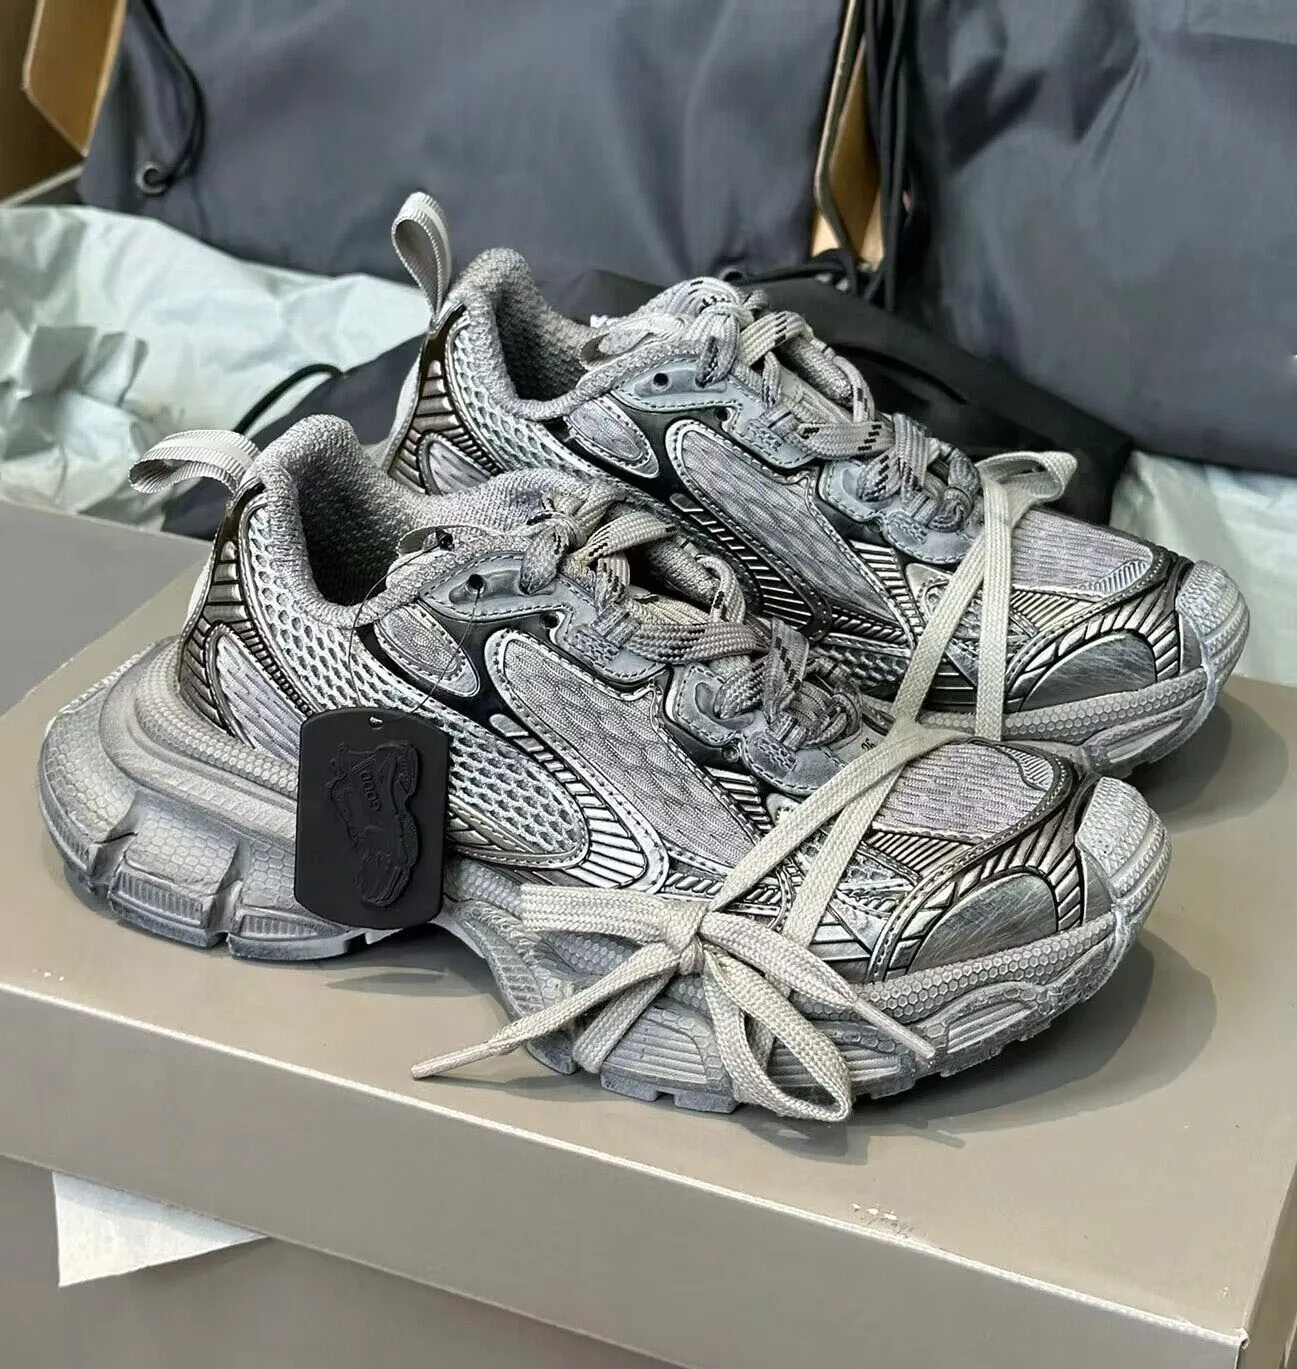 Italië ontwerp 3xl sneakers schoenen track 9 9.0 mannen dames retro sport zwart wit geel mesh nylon gepersonaliseerde schoenveters loper skateboard wandelen